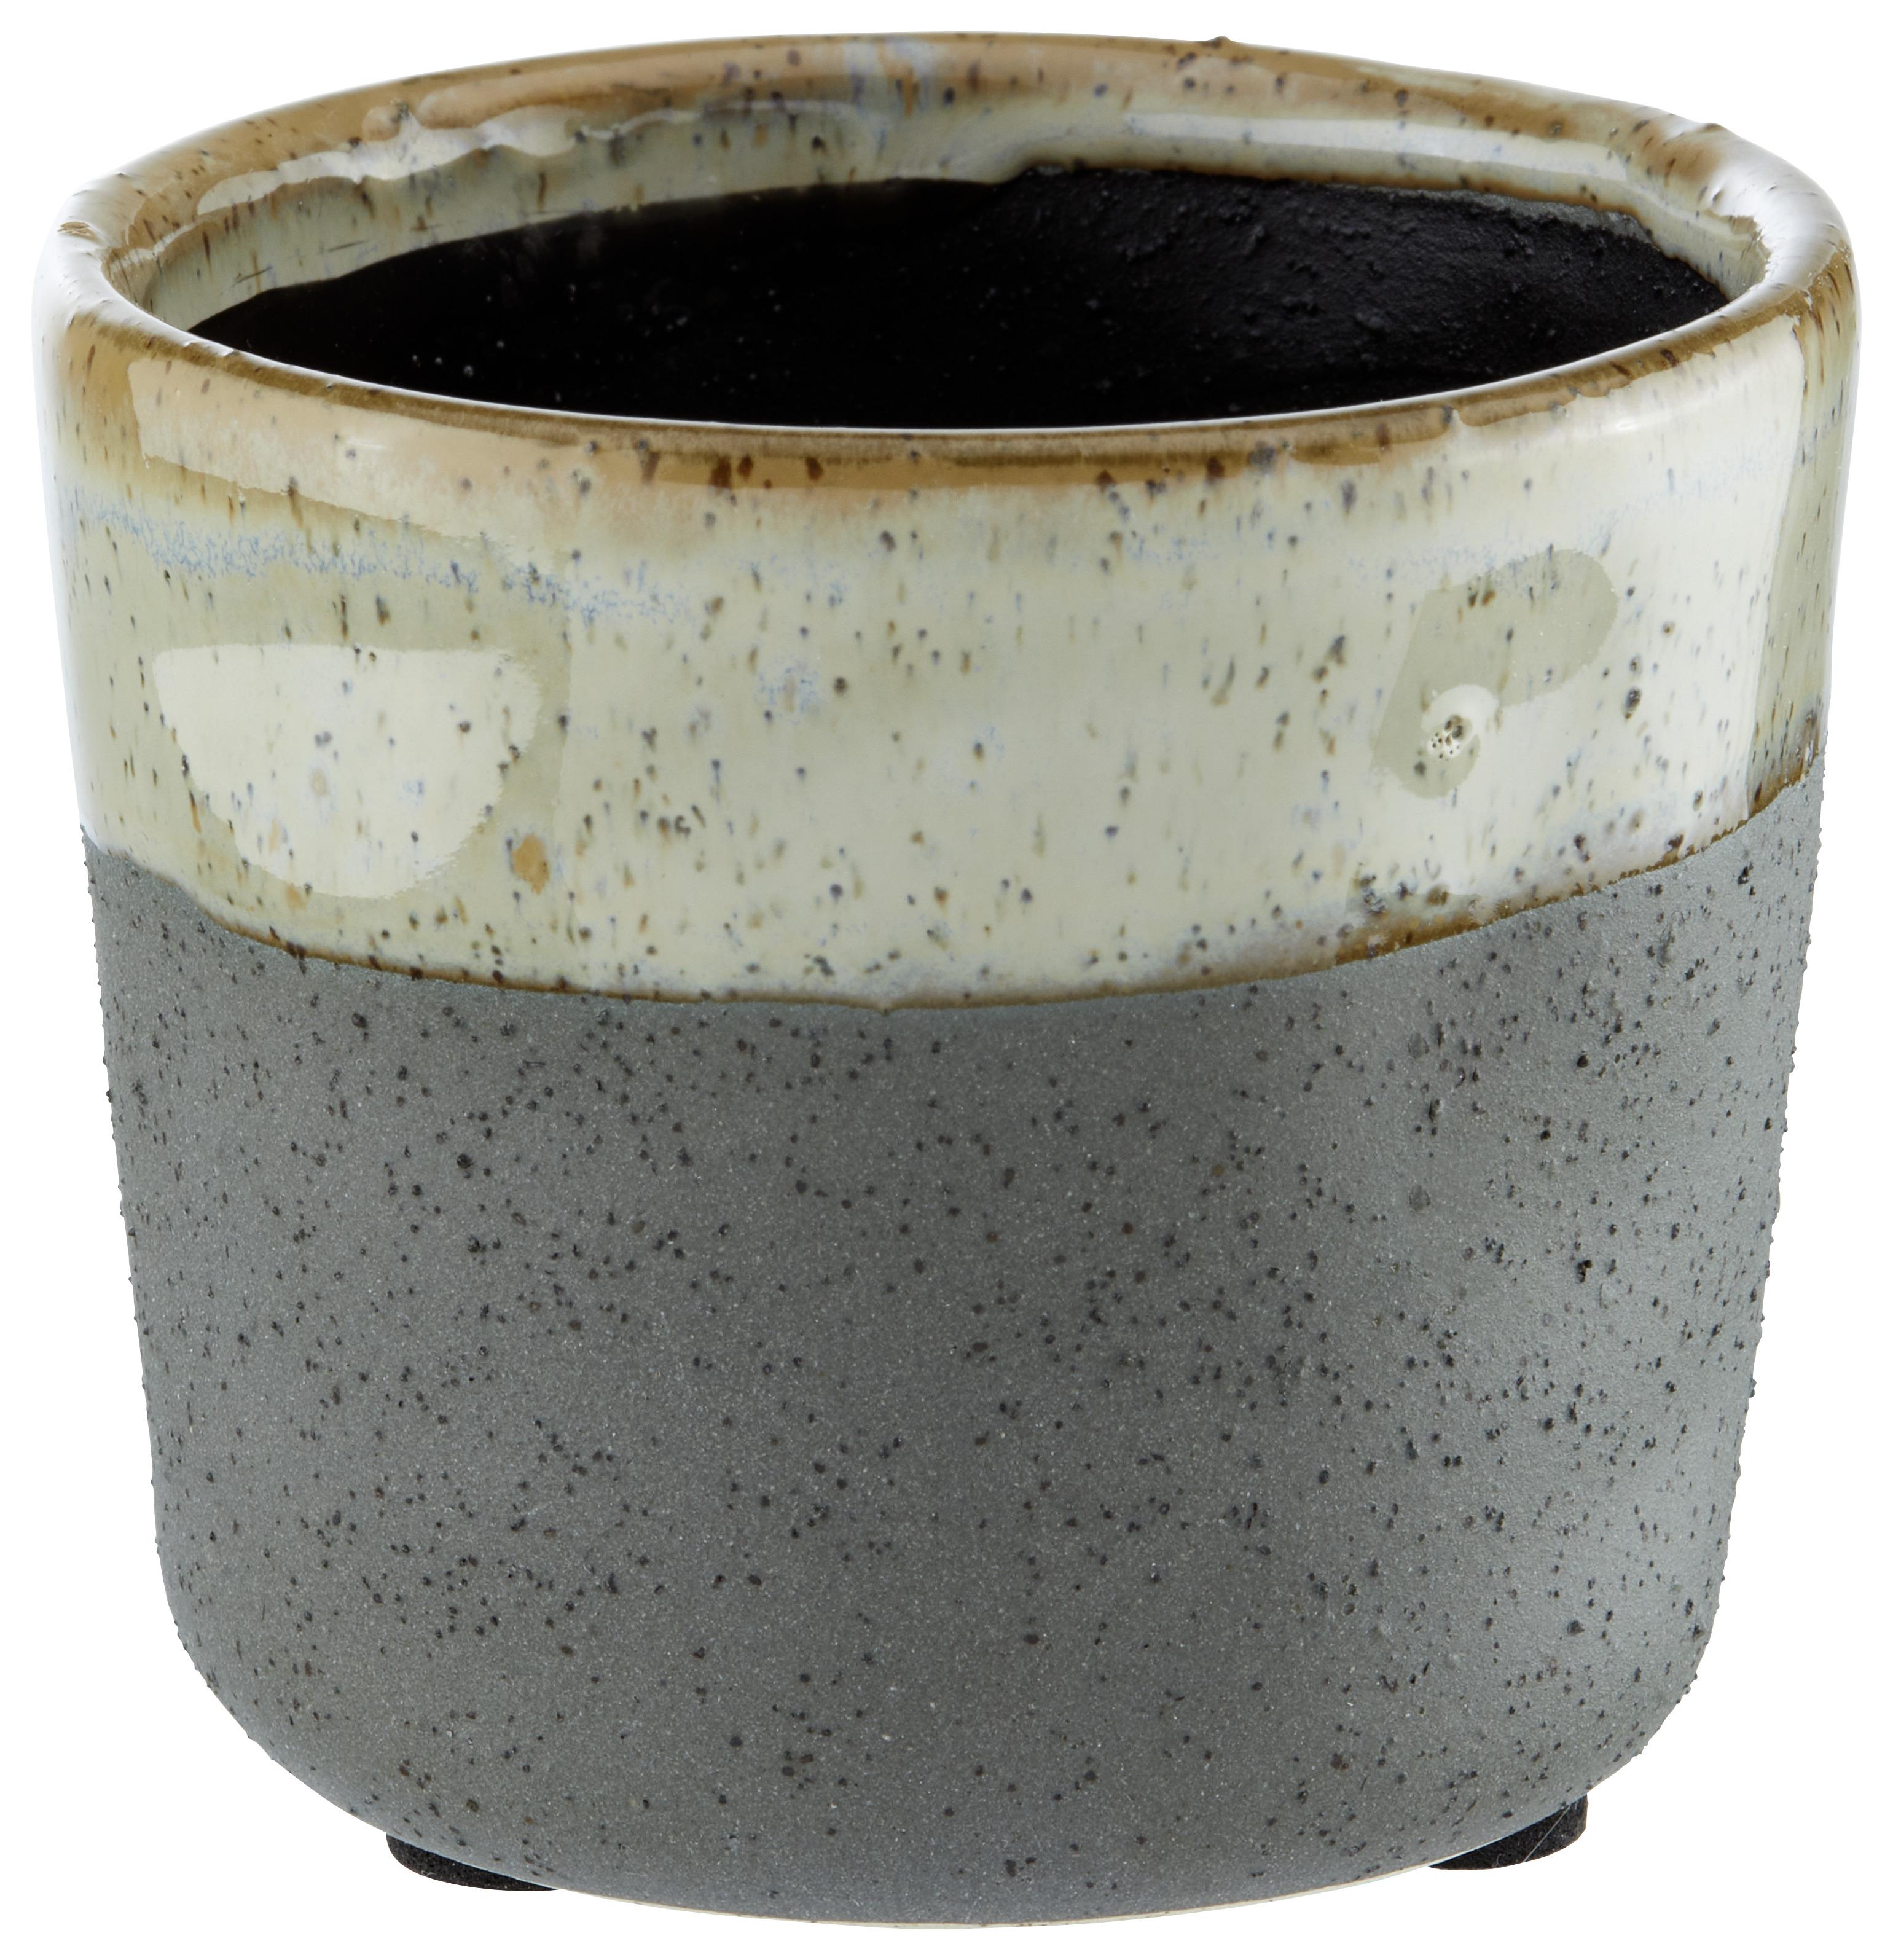 Übertopf Stoneware aus Steinzeug Ø ca. 7cm - Grau, Keramik (7/6cm) - Modern Living